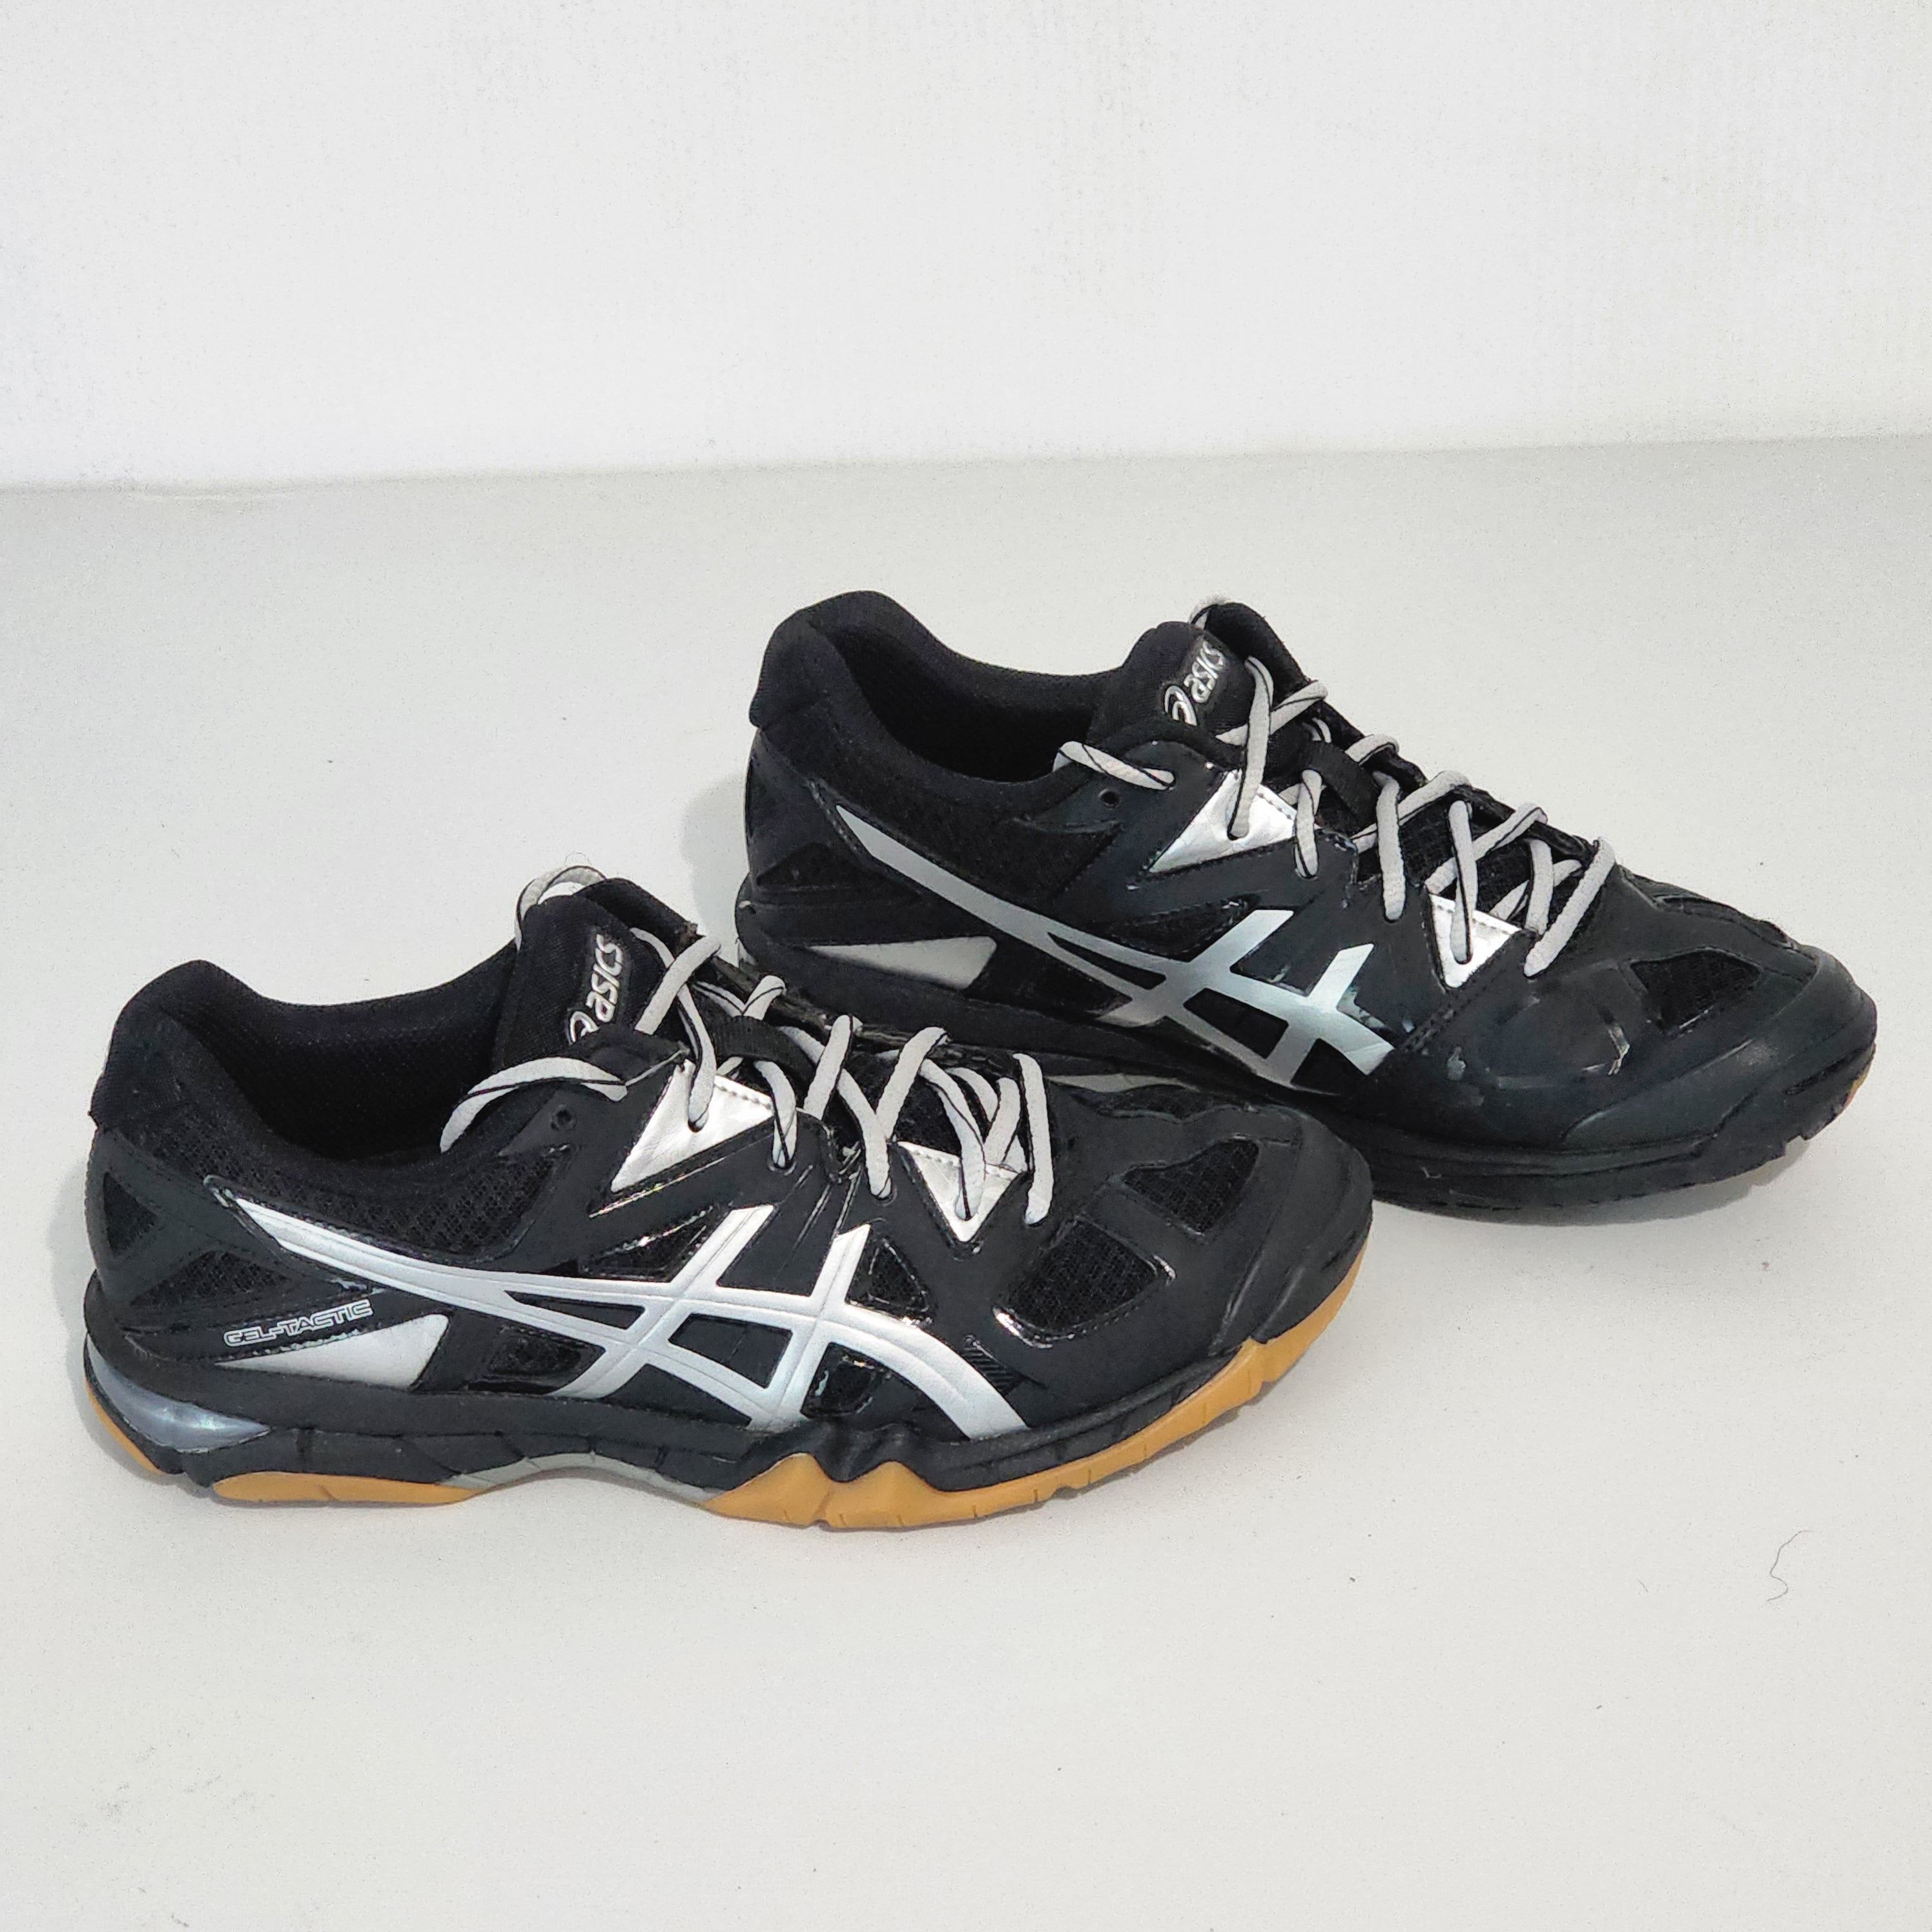 Asics Womens Gel Tactic B554N Black Running Shoes Sneakers Size 10